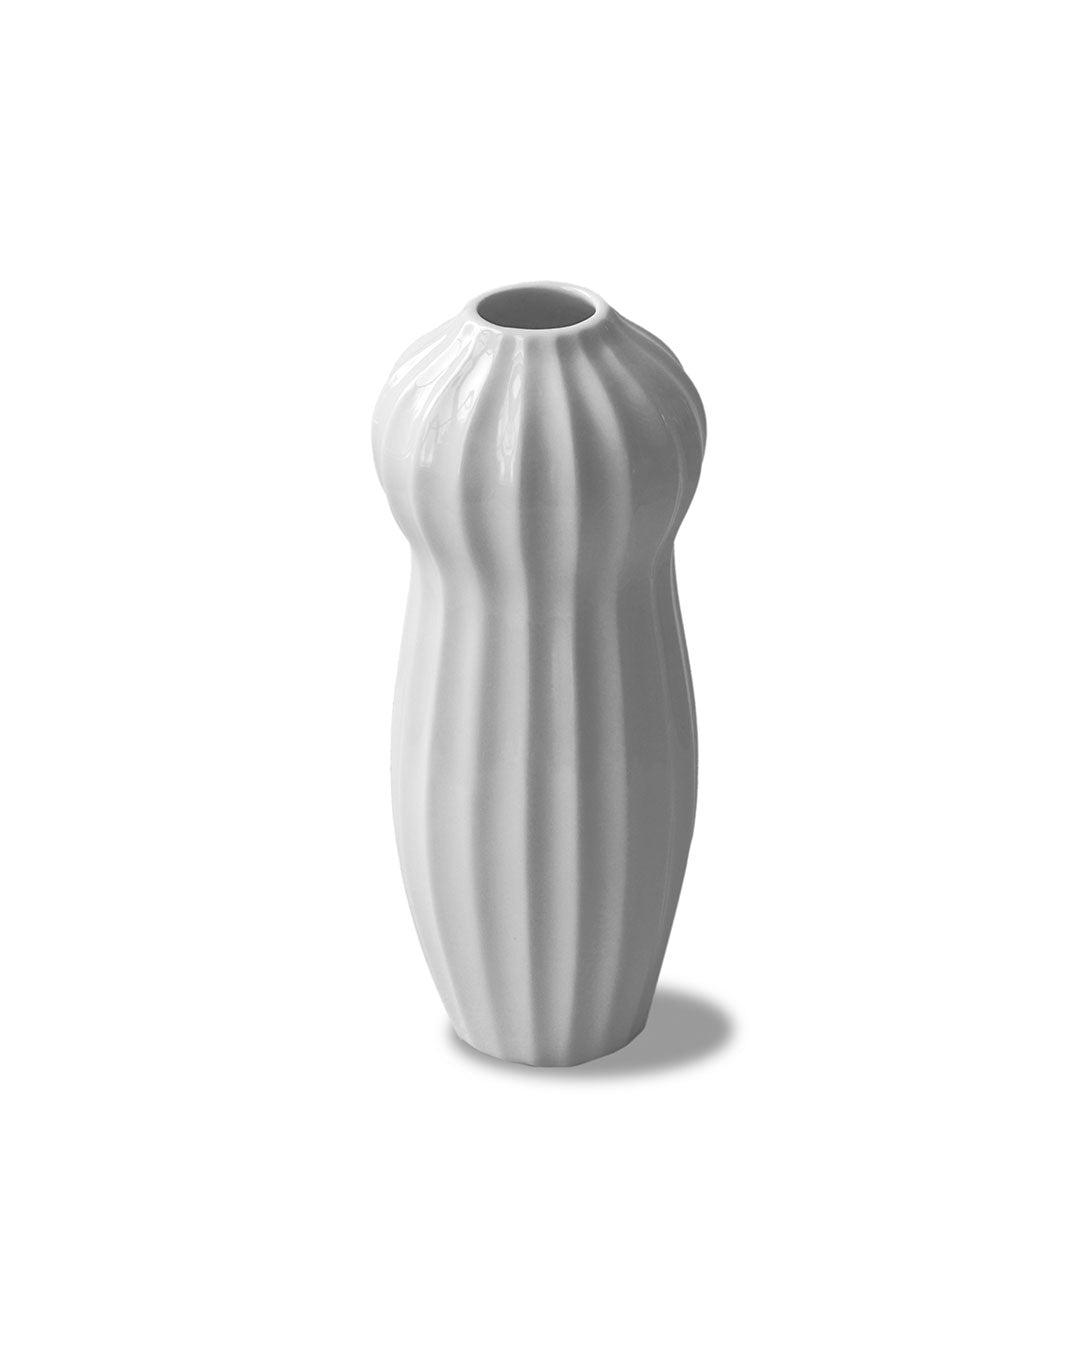 Maja ribbed porcelain Ikebana vase tableware Maia Ming Designs